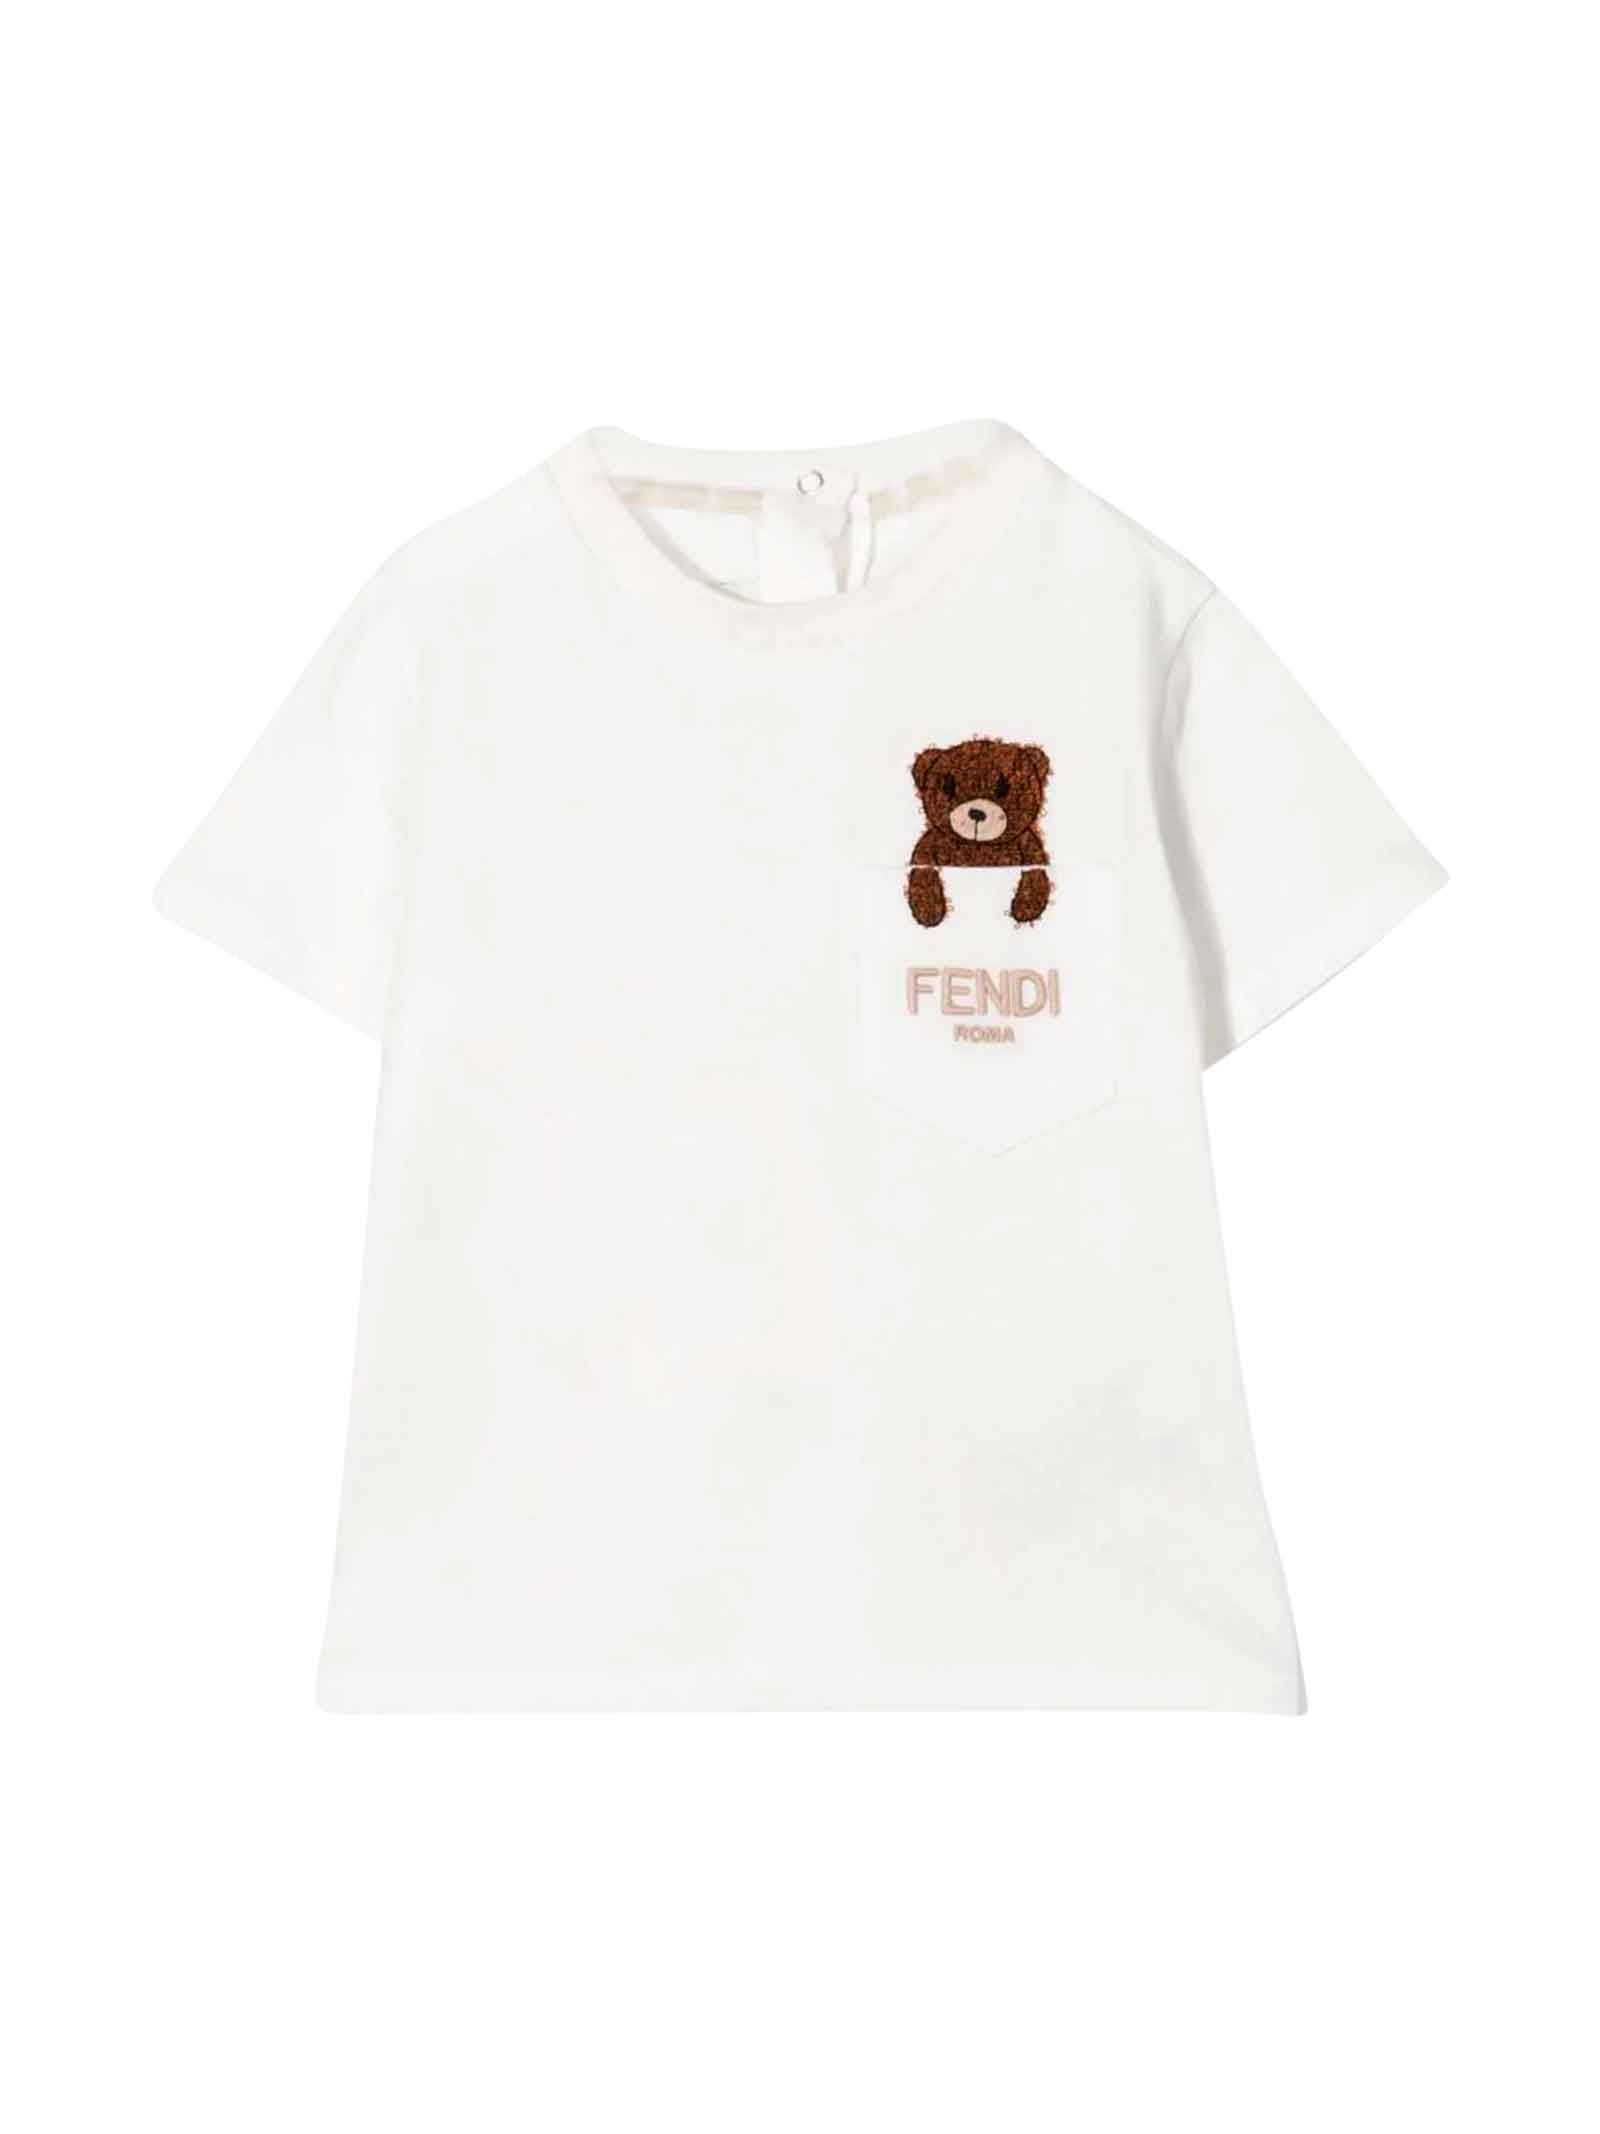 Fendi Teddy Bear T-shirt With Embroidery